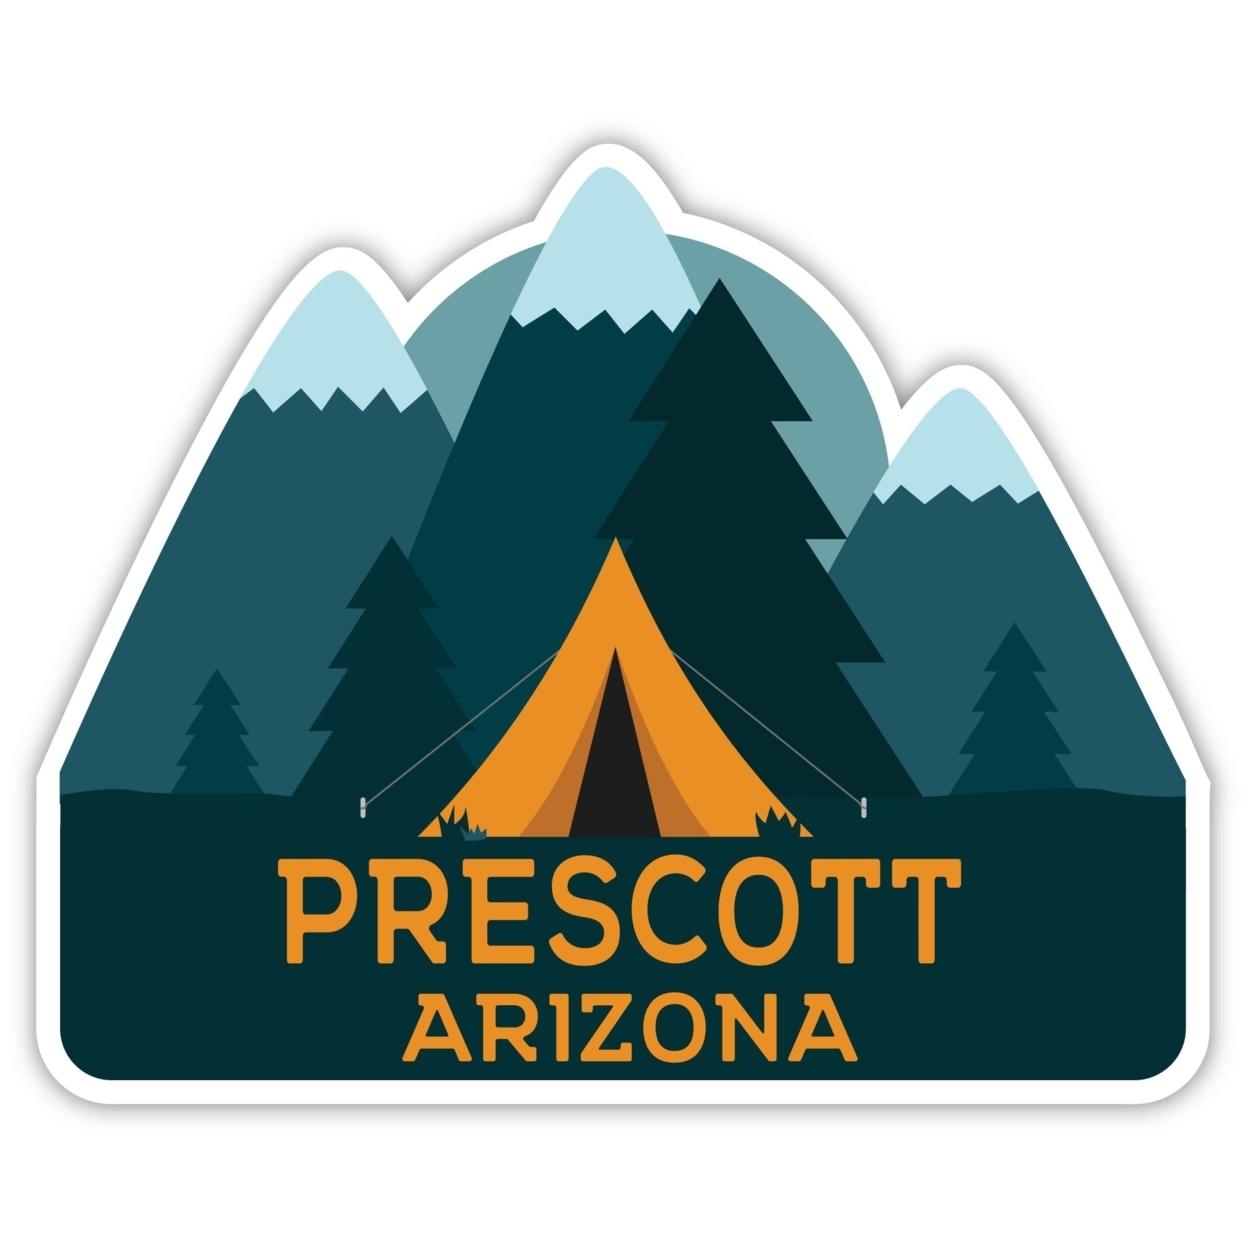 Prescott Arizona Souvenir Decorative Stickers (Choose Theme And Size) - Single Unit, 4-Inch, Camp Life